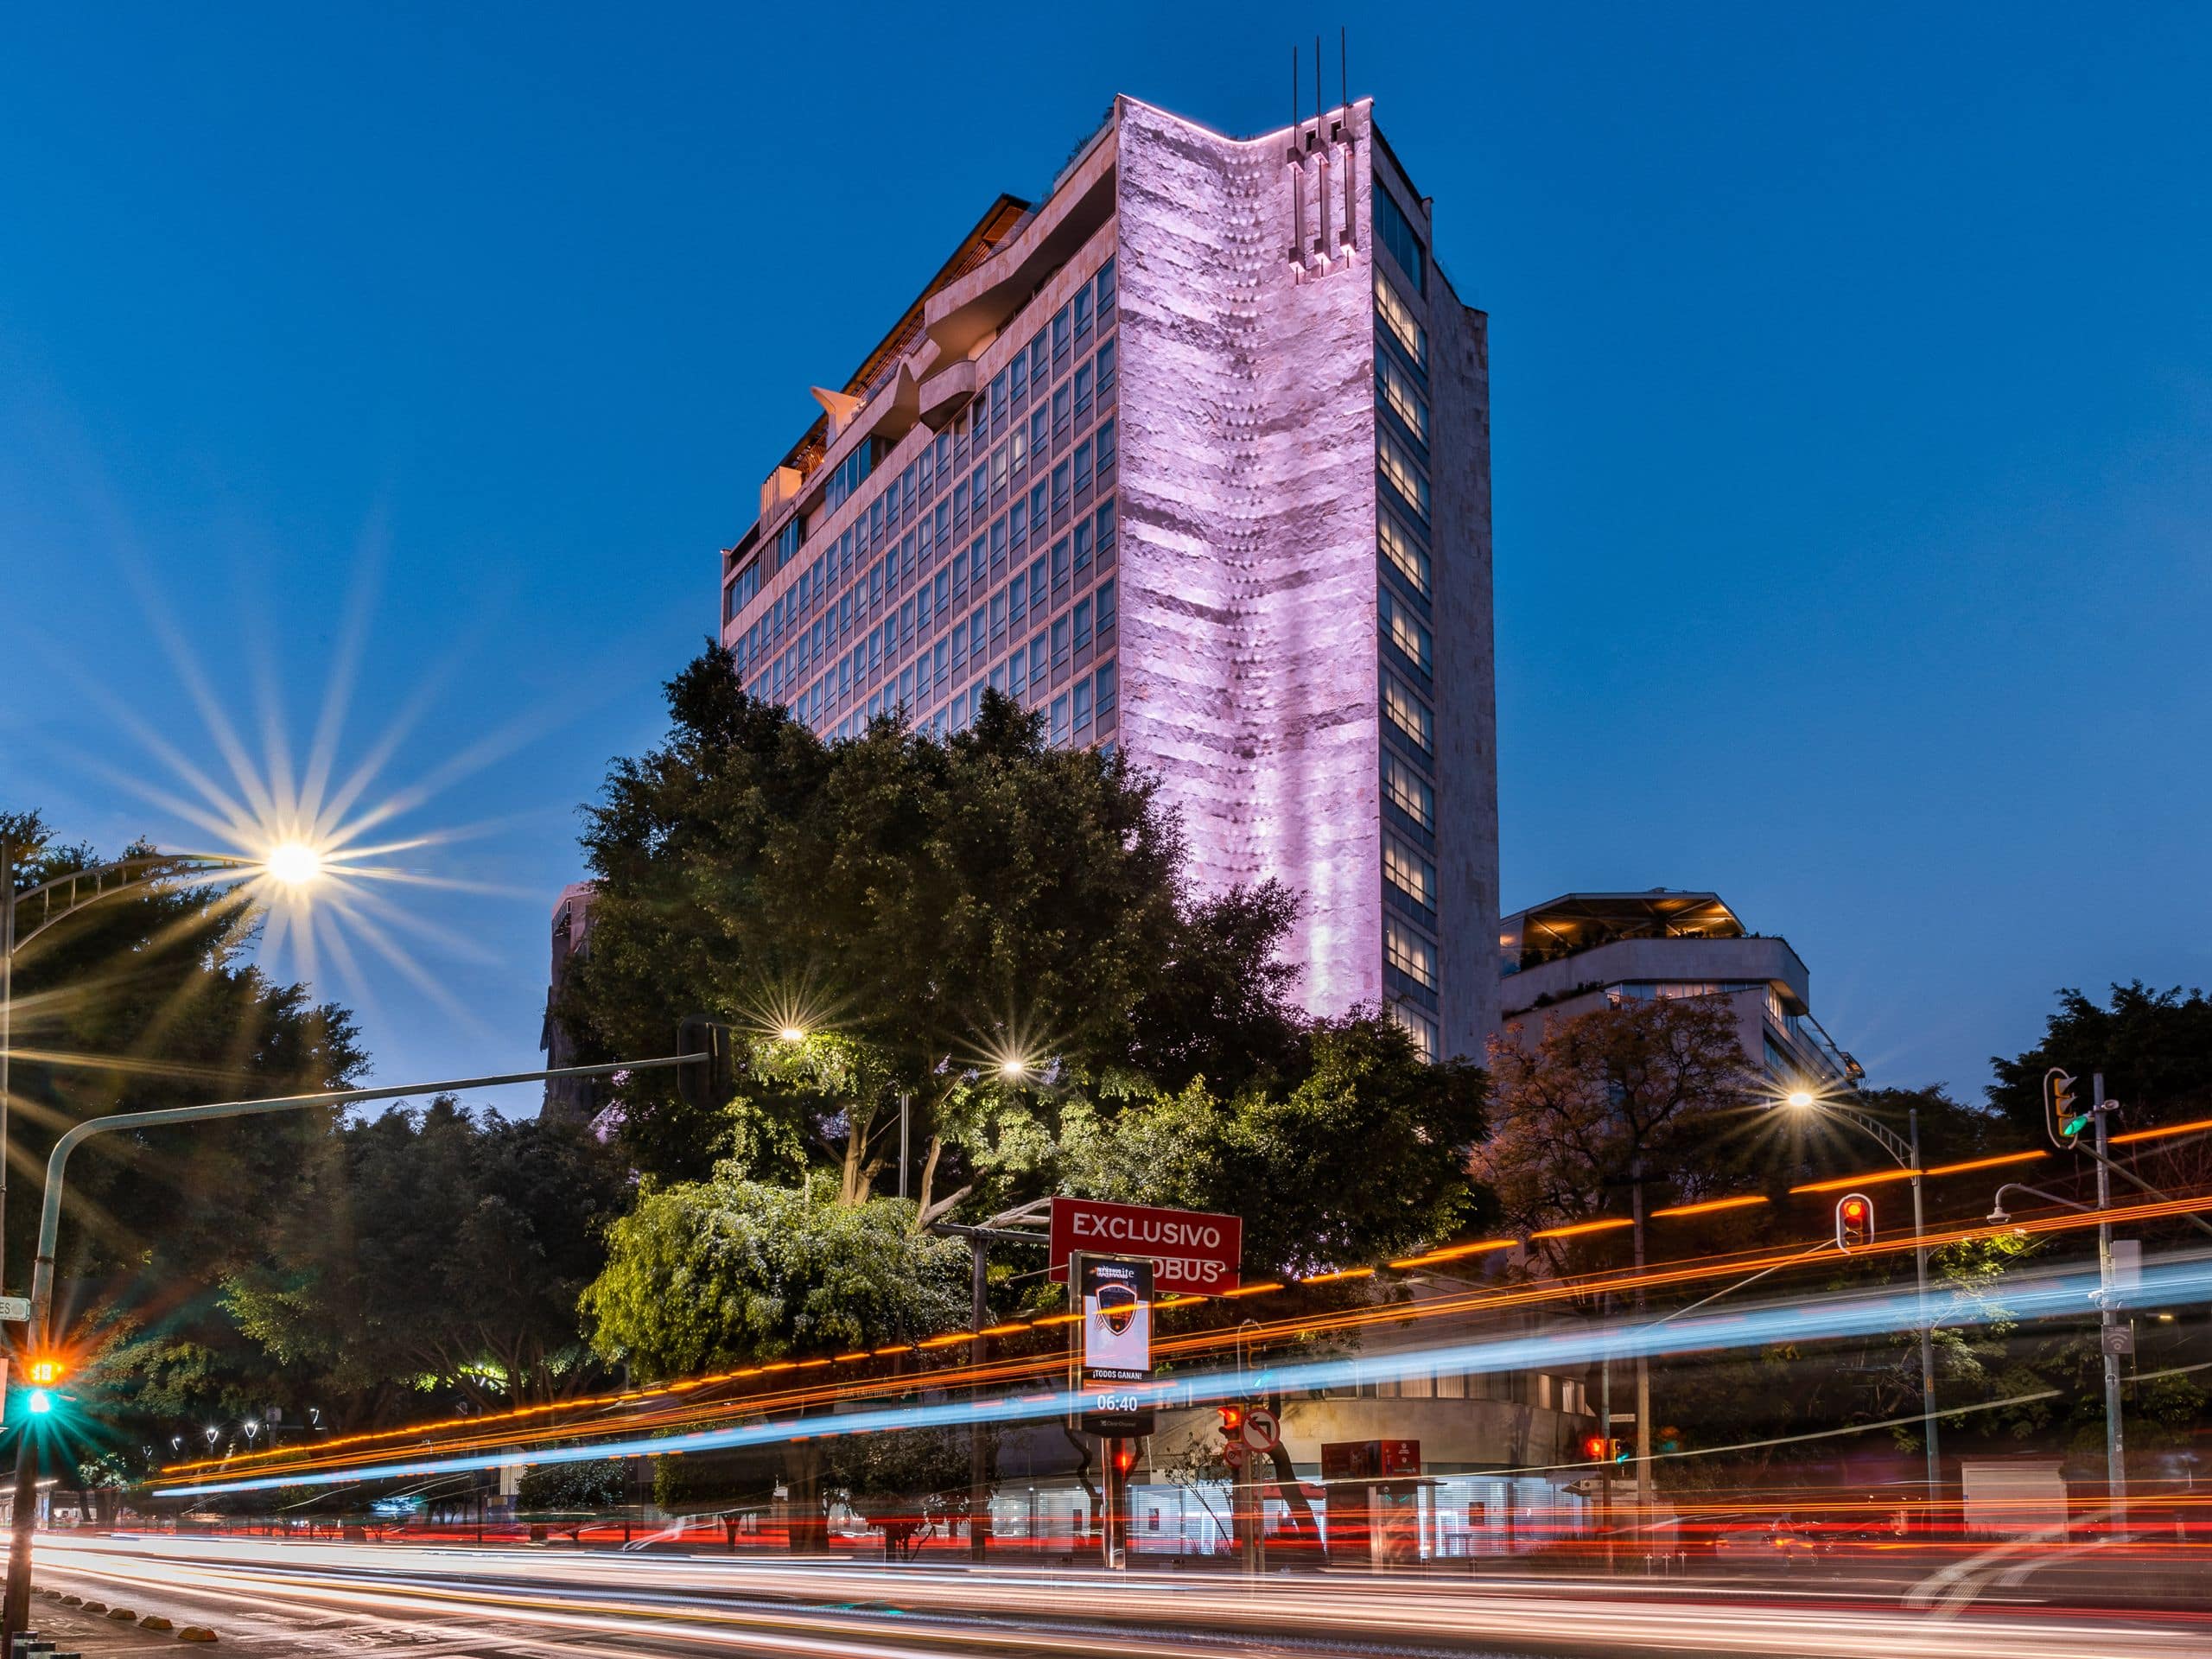 Andaz Mexico City Condesa Hotel Exterior At Night